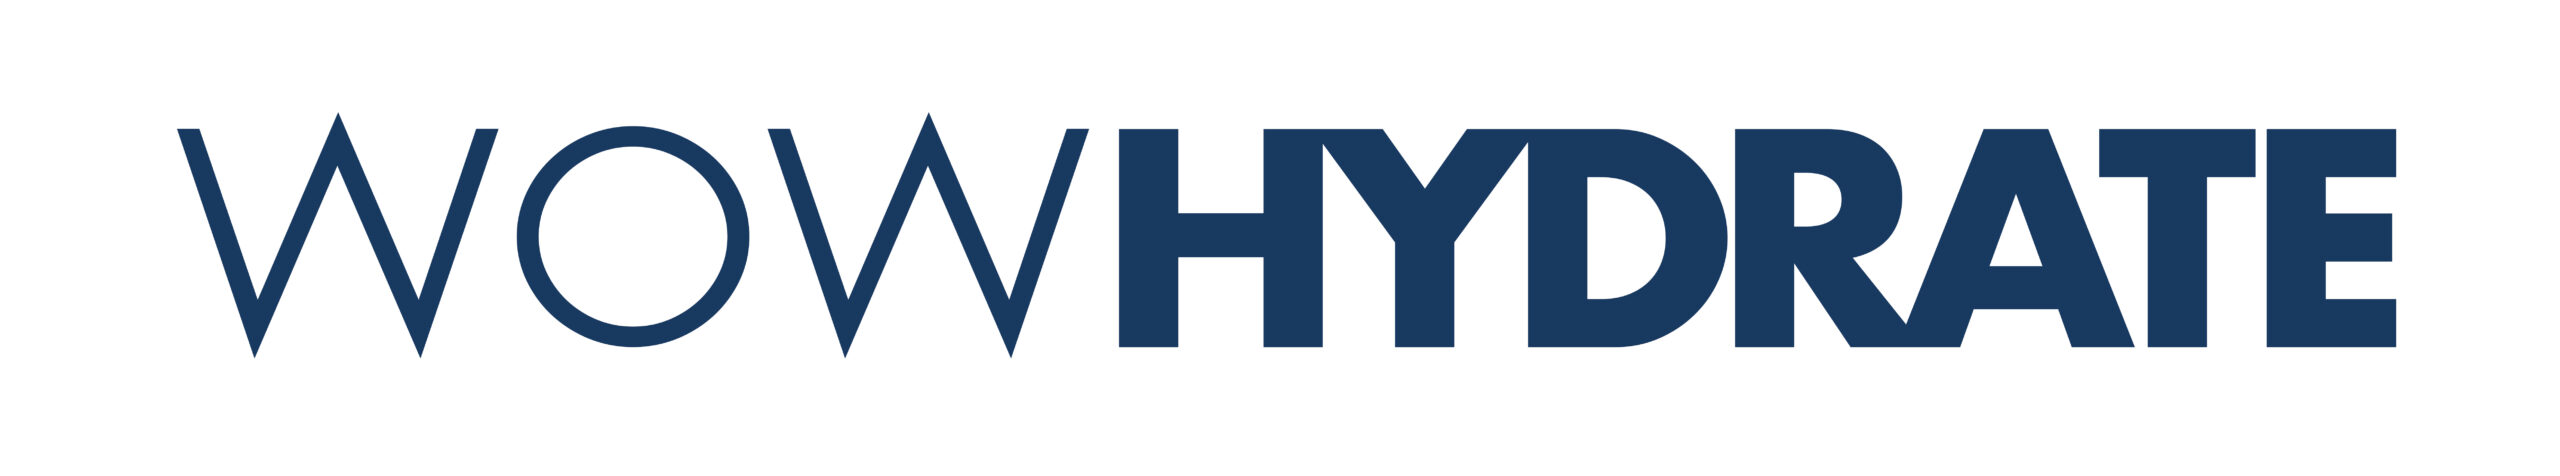 WH-Logo